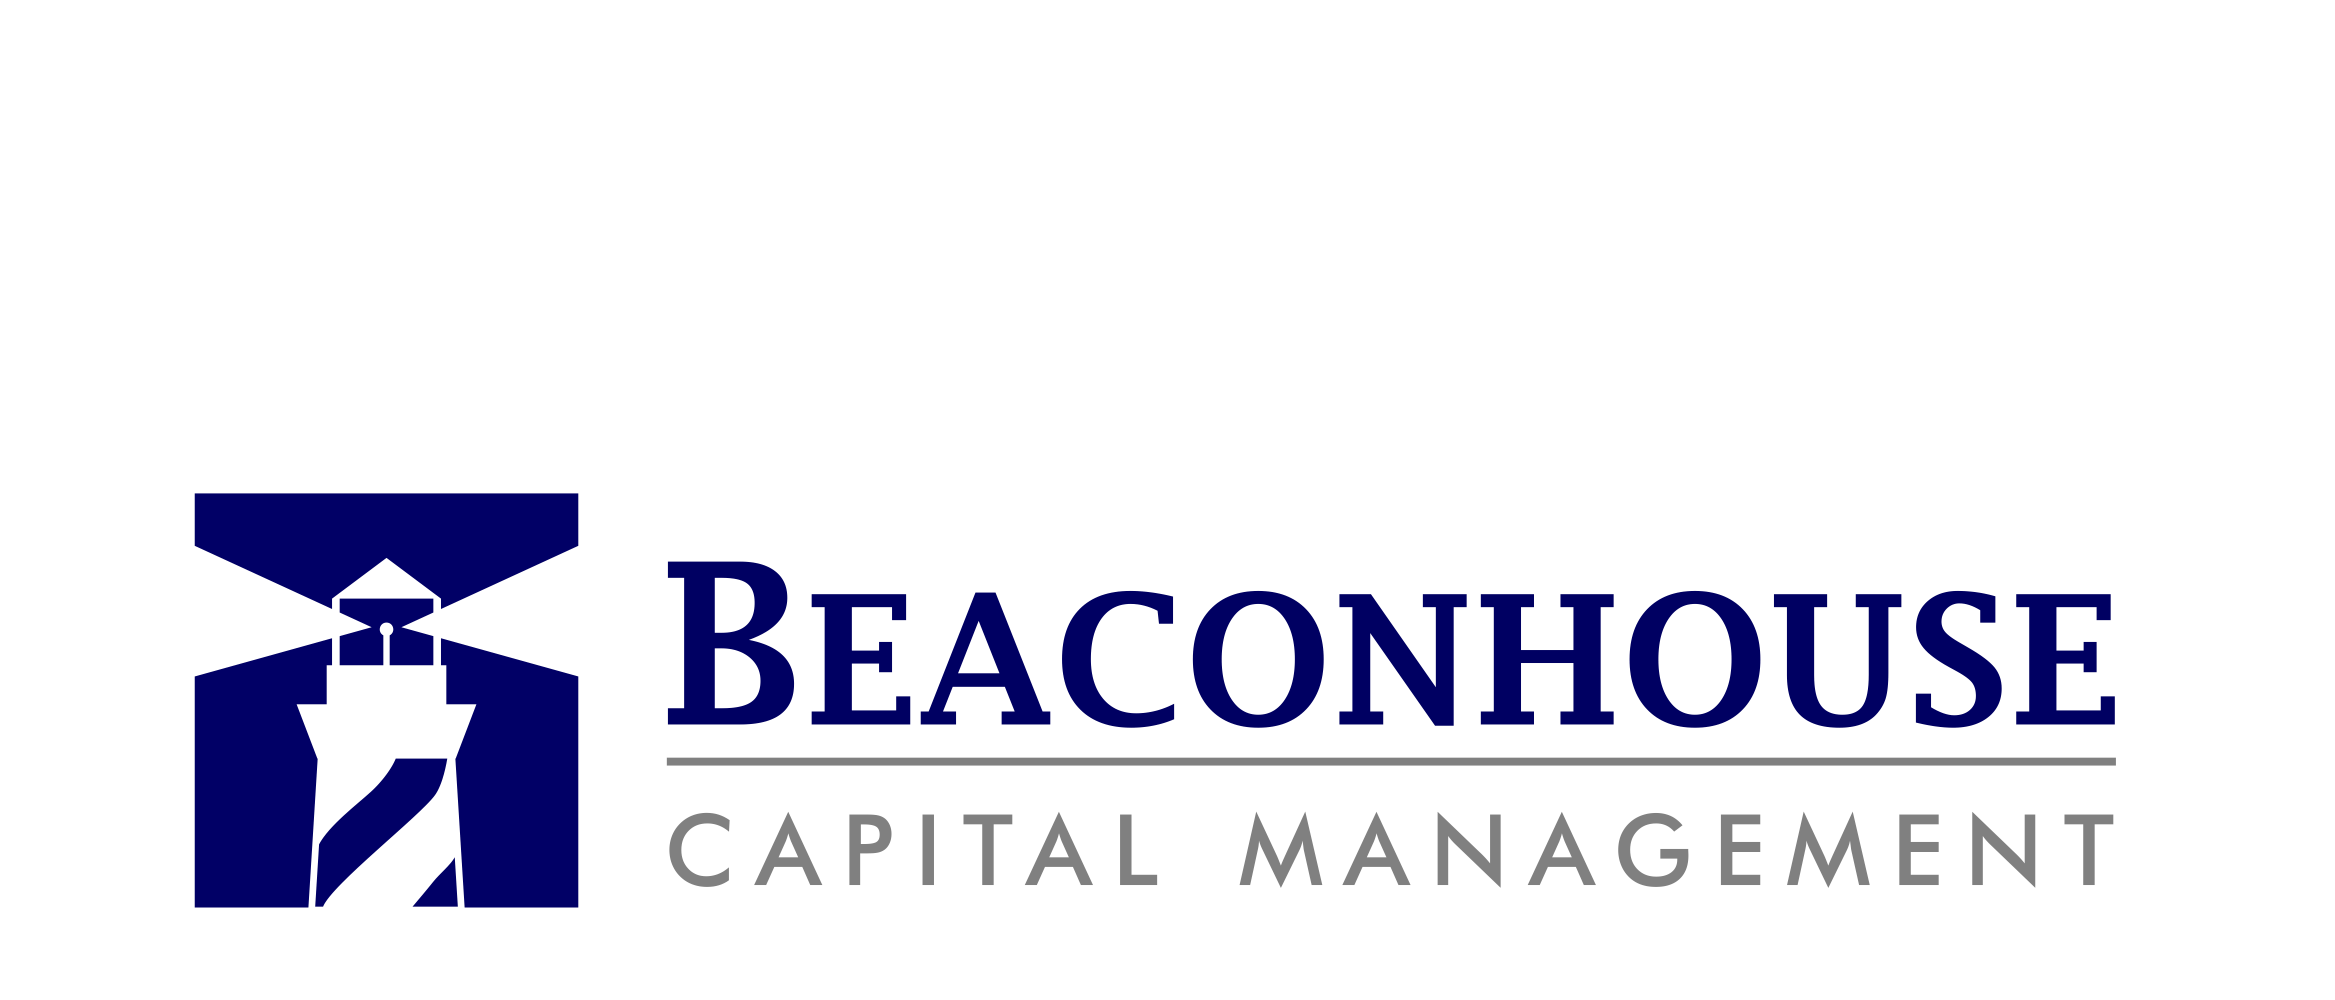 Beaconhouse Logo - Beaconhouse Capital Management